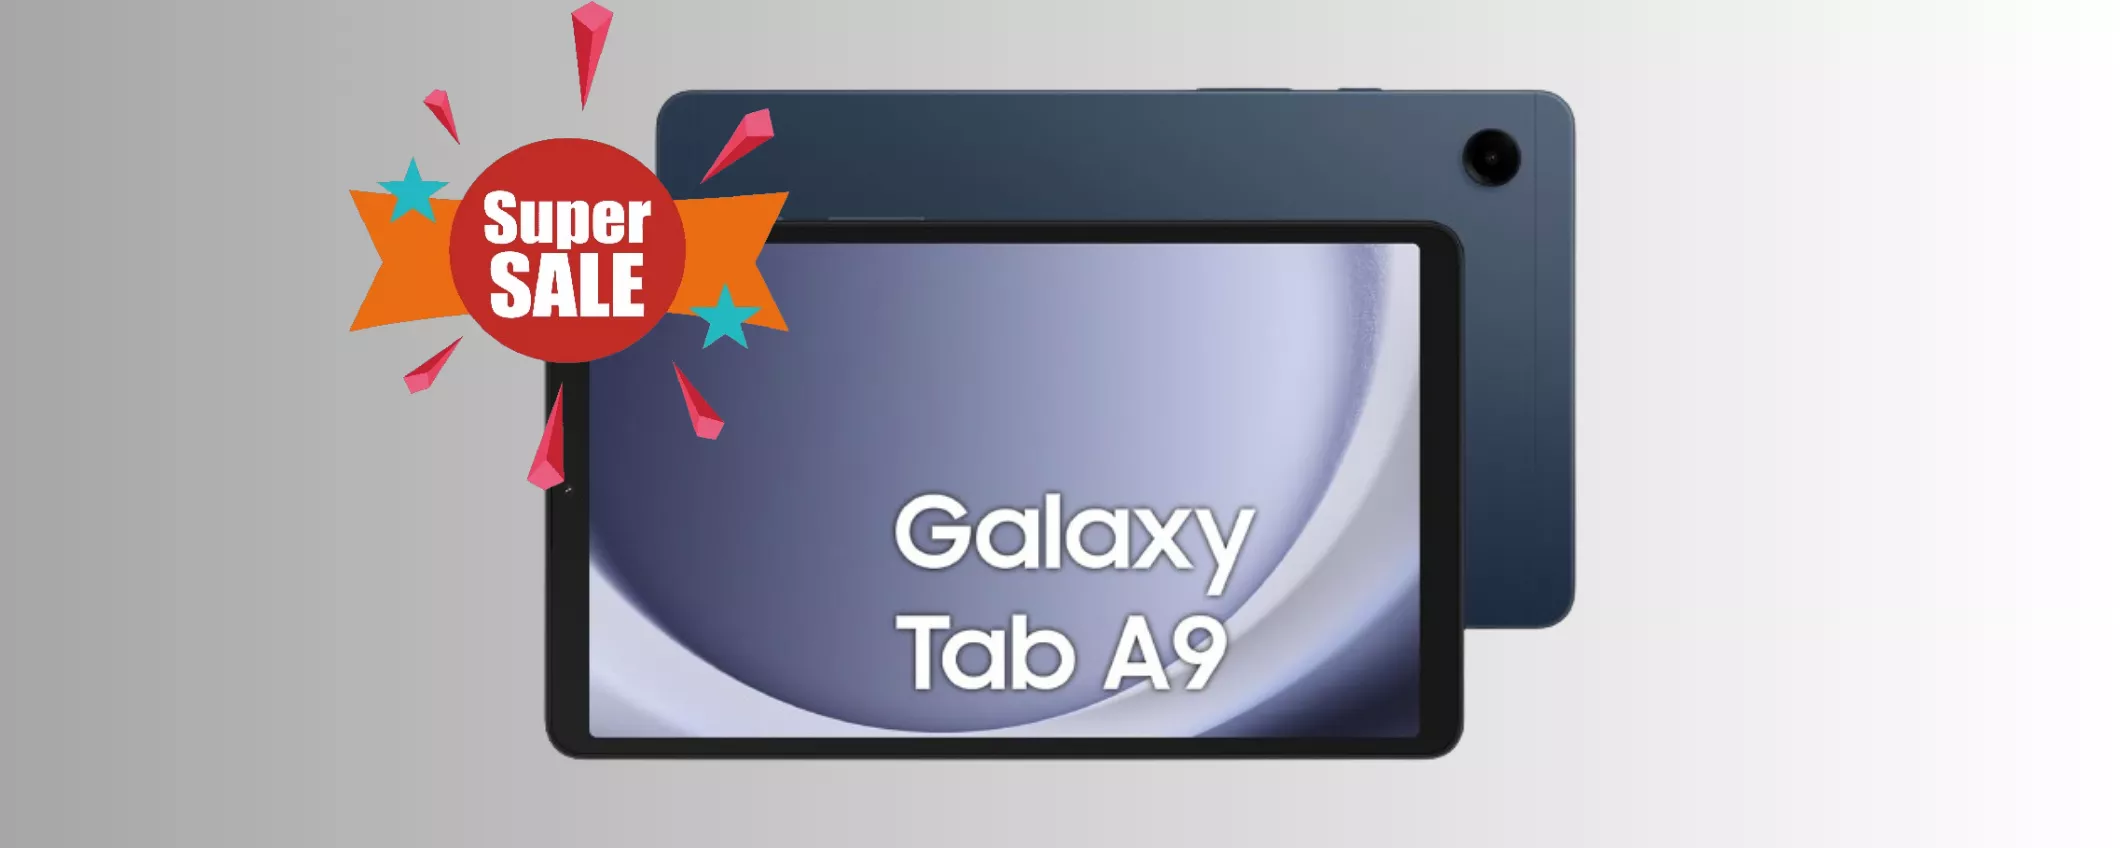 Samsung Galaxy Tab A9+: il tablet PIU' VENDUTO oggi è SCONTATISSIMO AL 35%